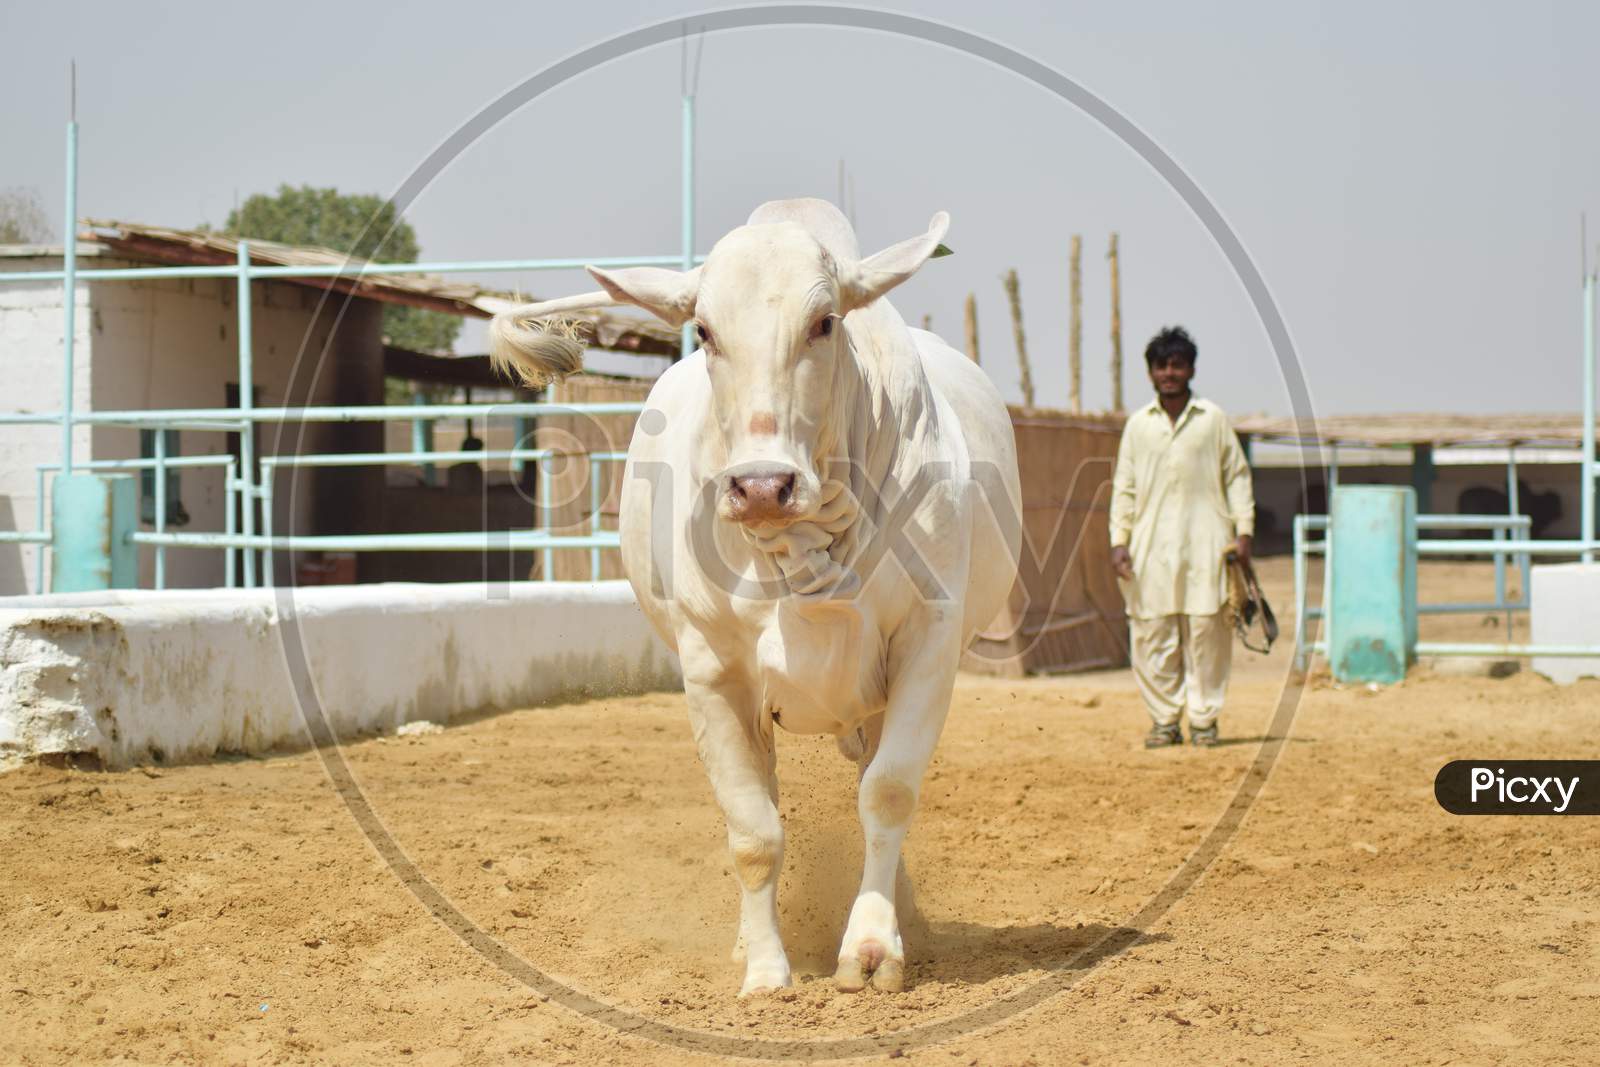 A White Bull running in the Cattle Farm